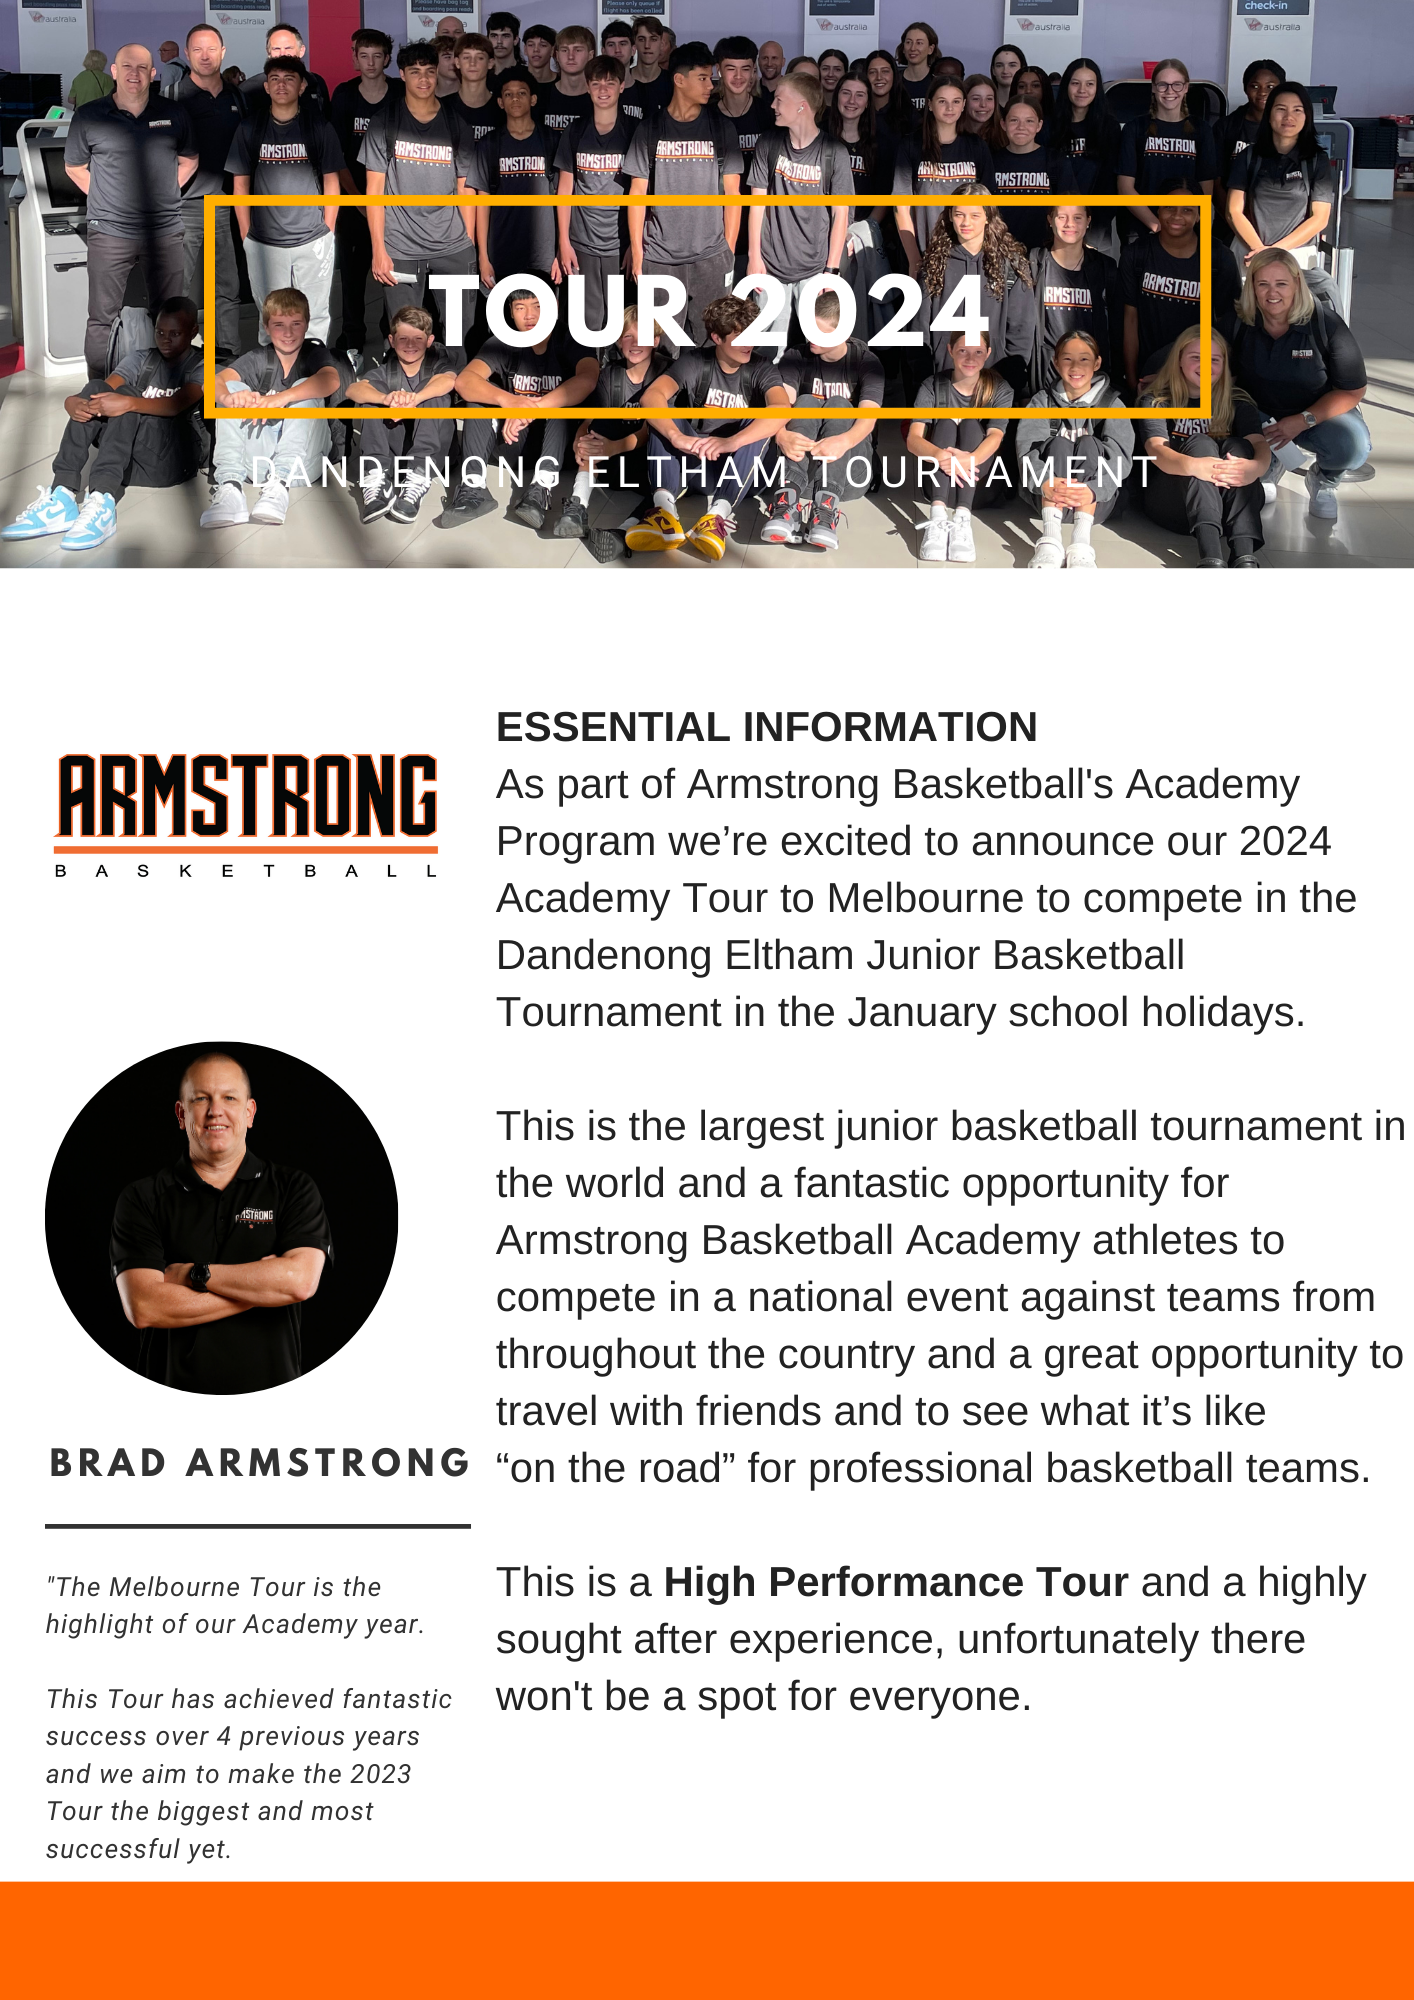 Eltham Dandenong Junior Basketball Tournament 2024 Armstrong Basketball